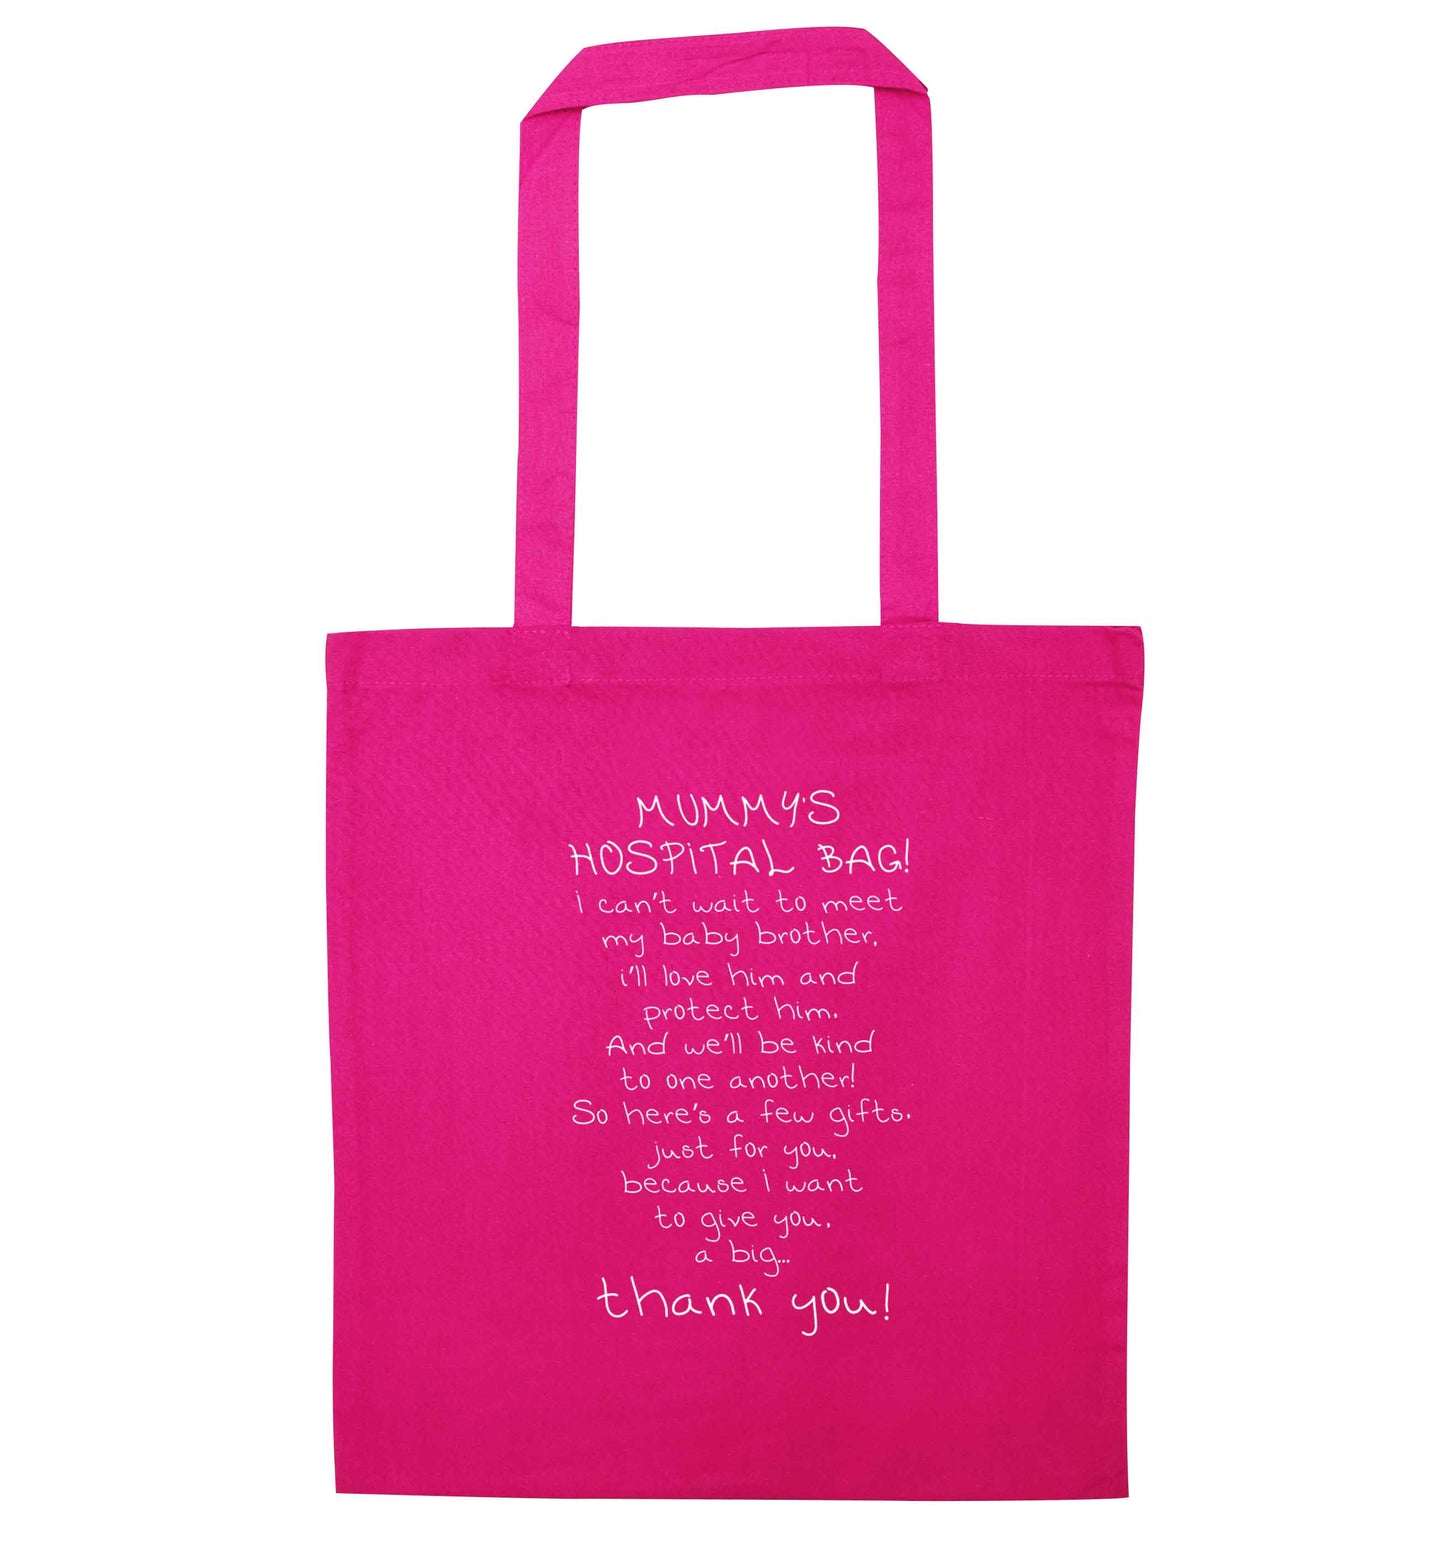 Mummy's hospital bag poem baby brother pink tote bag